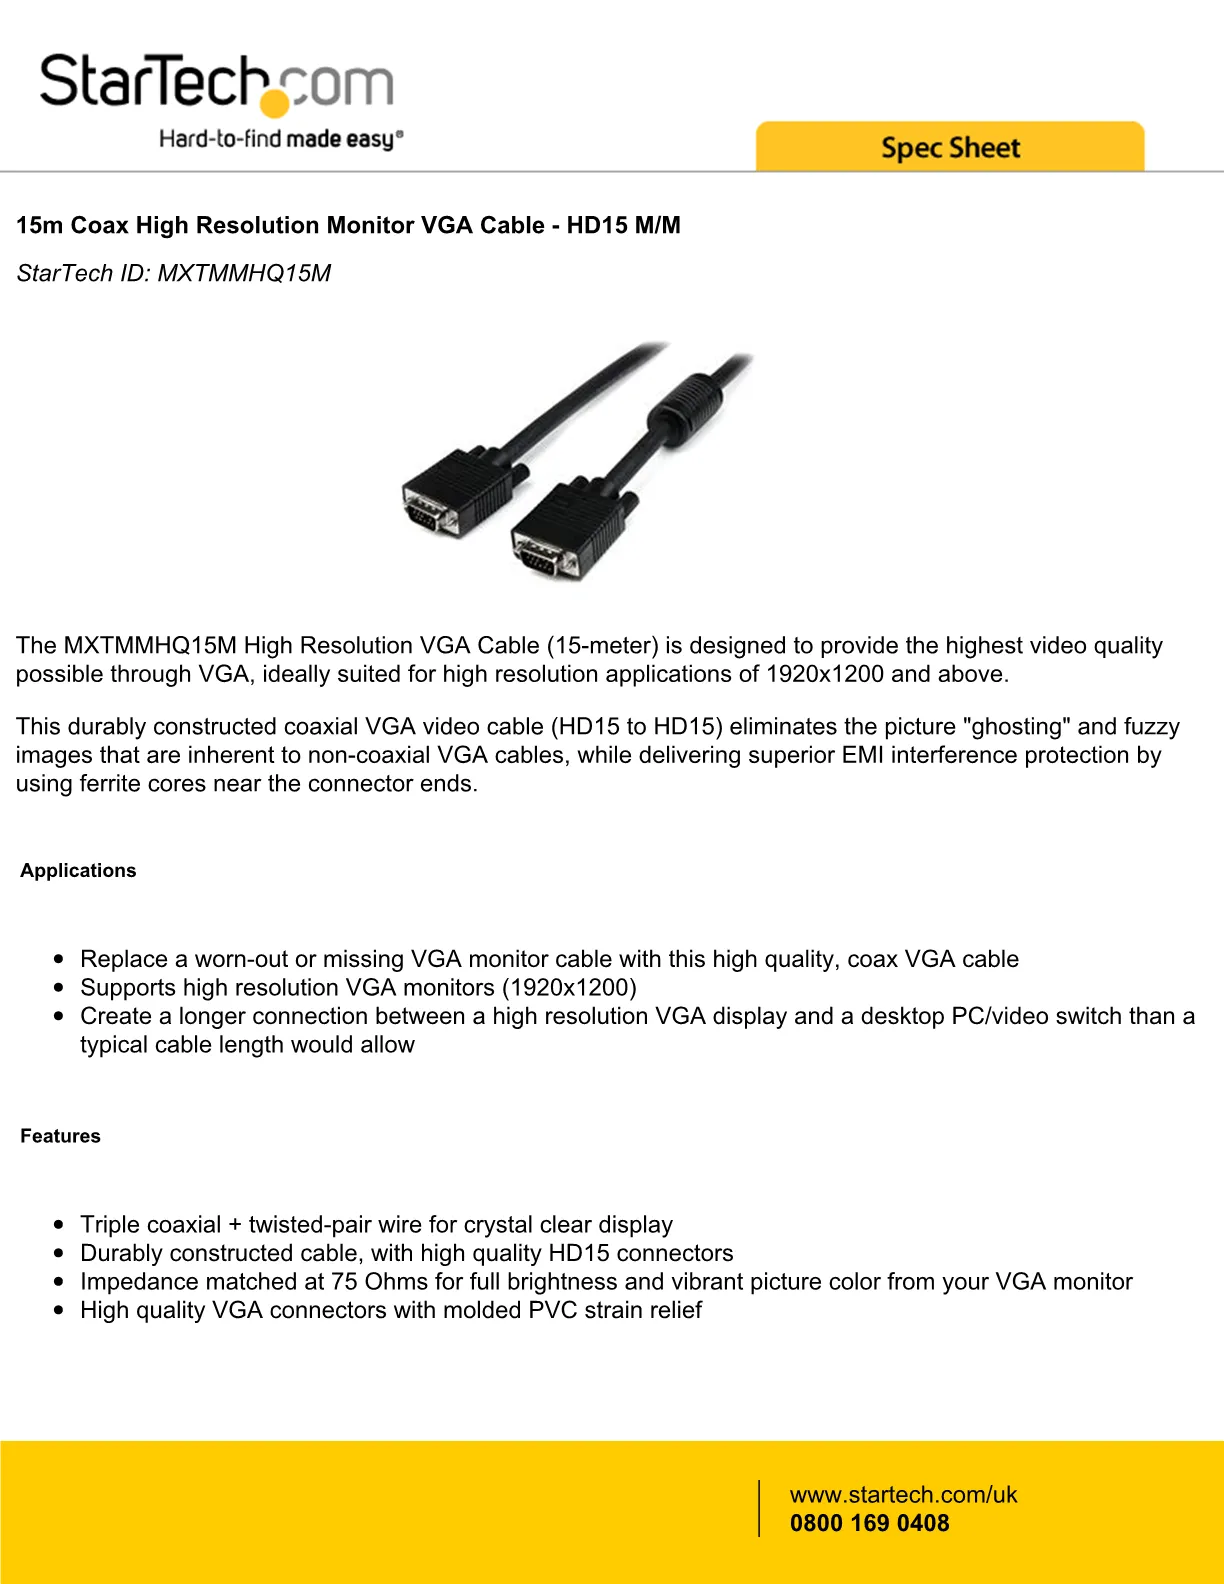 15m Coax High Resolution Monitor VGA Cable - HD15 M/M